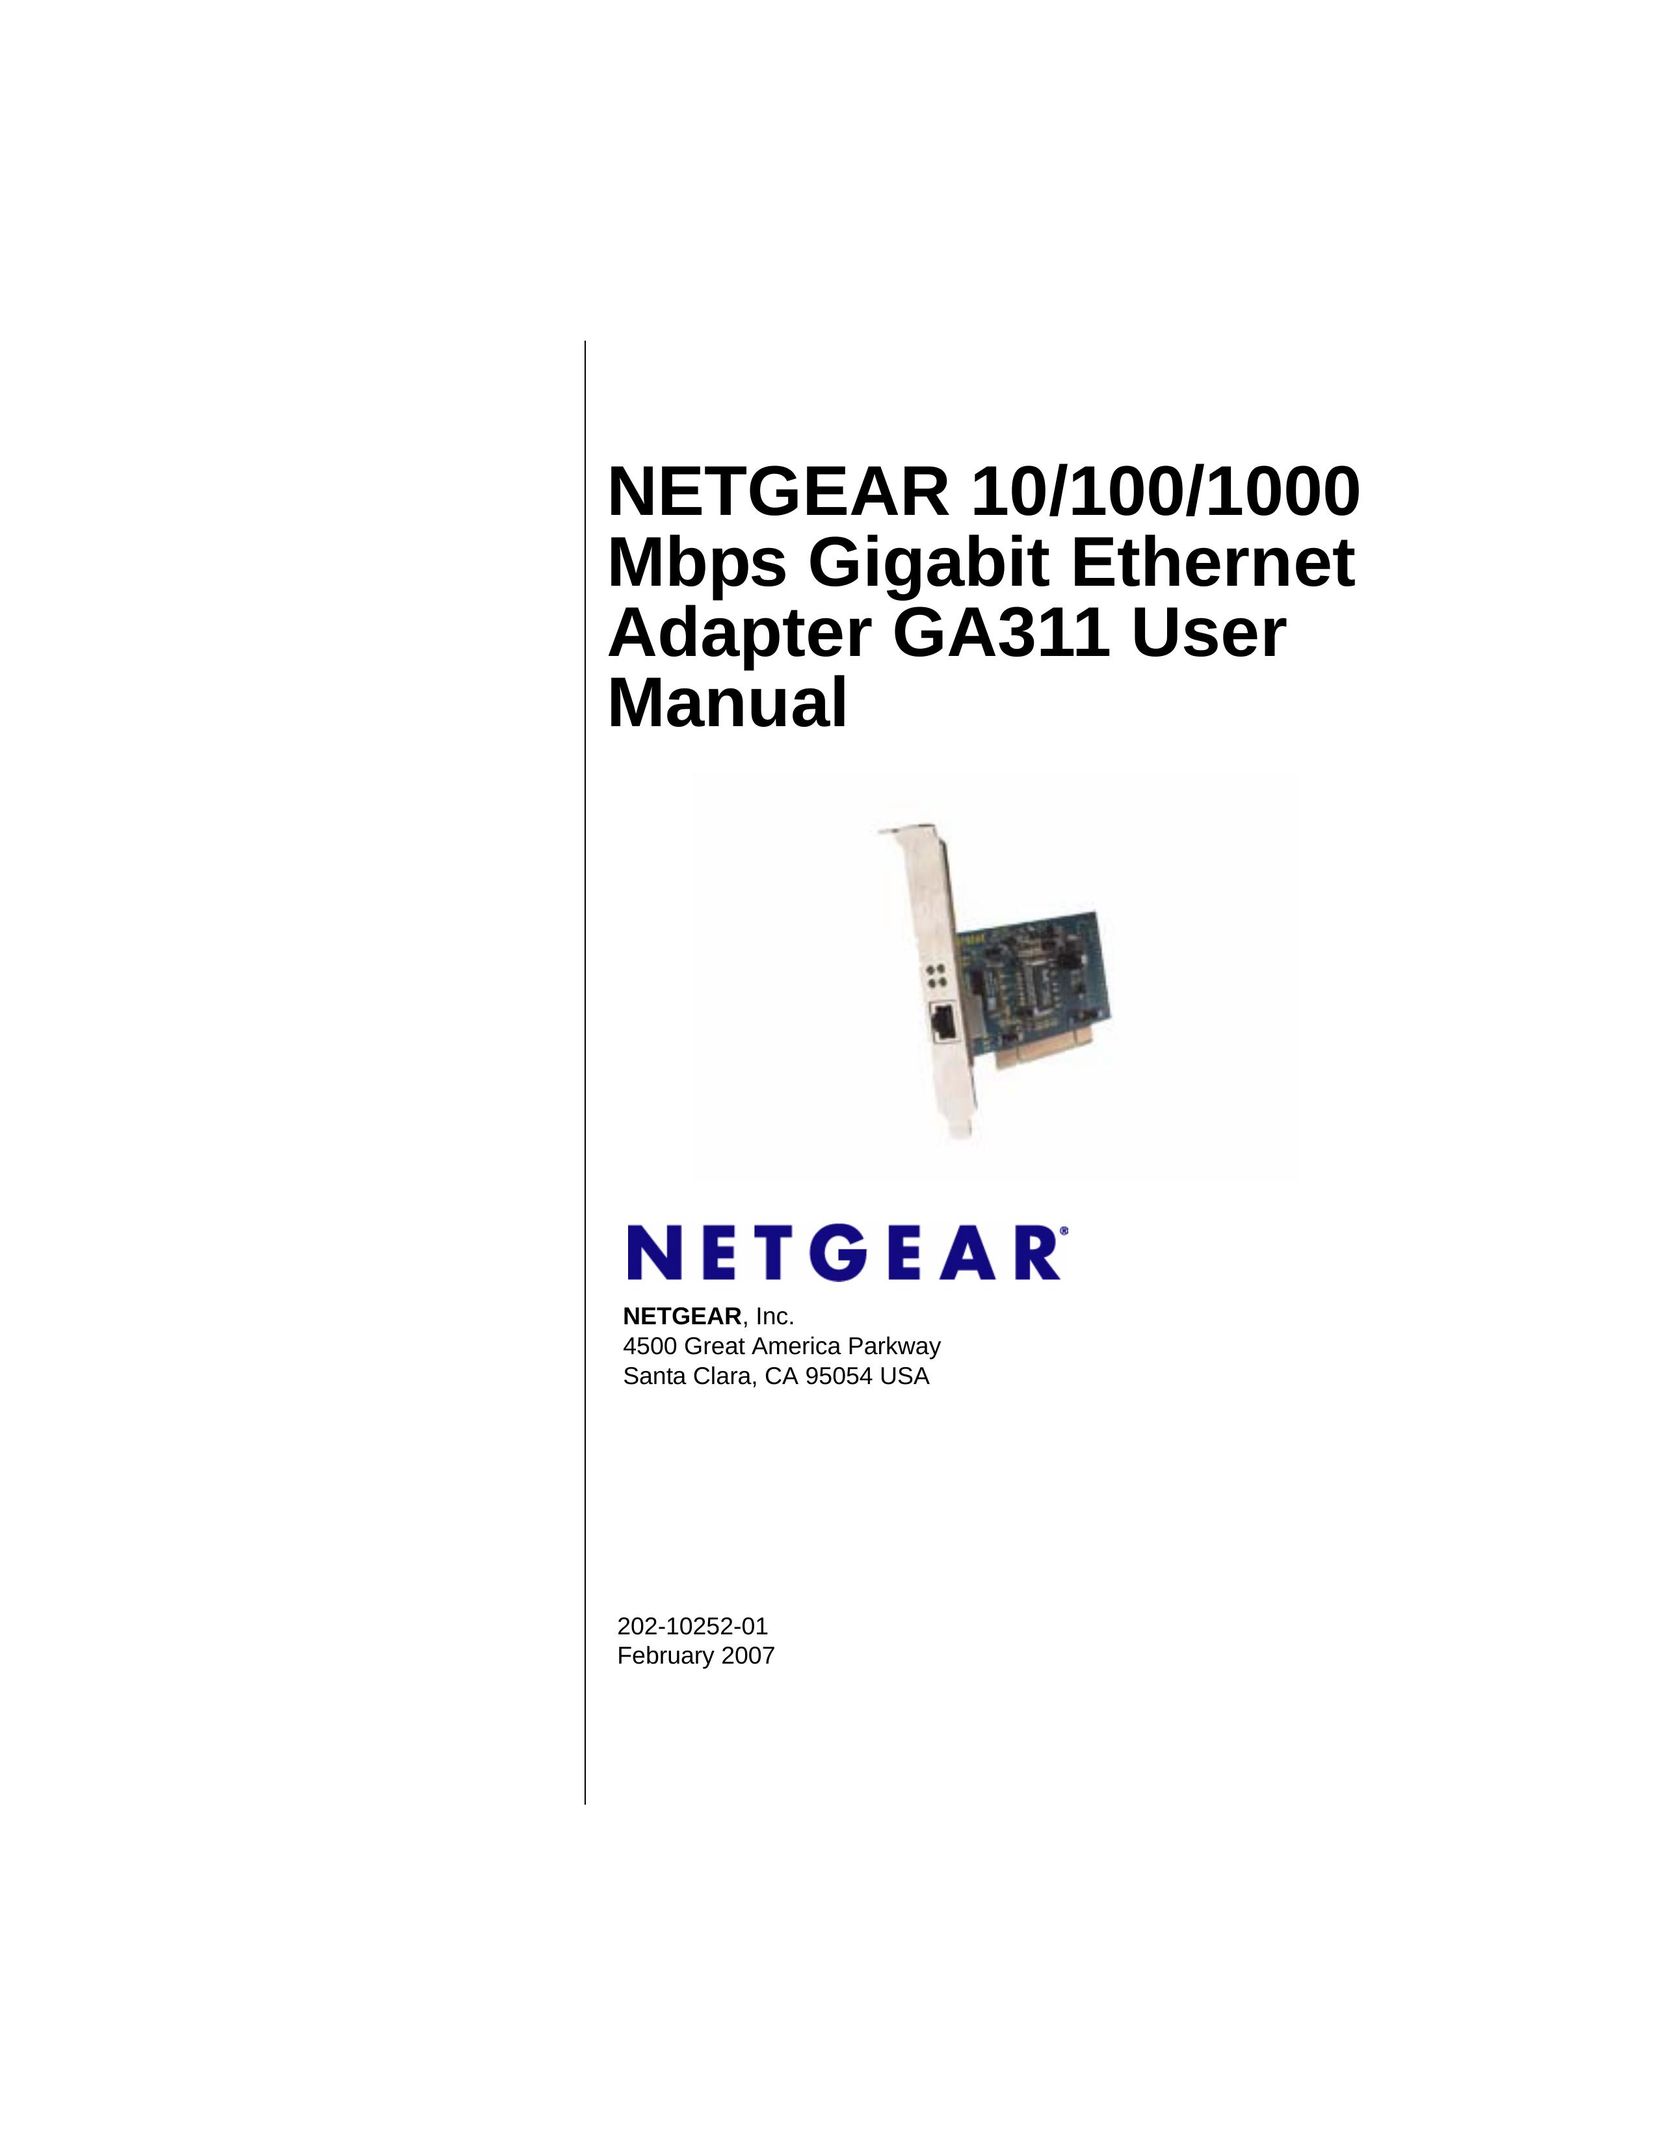 NETGEAR GA311 Network Card User Manual